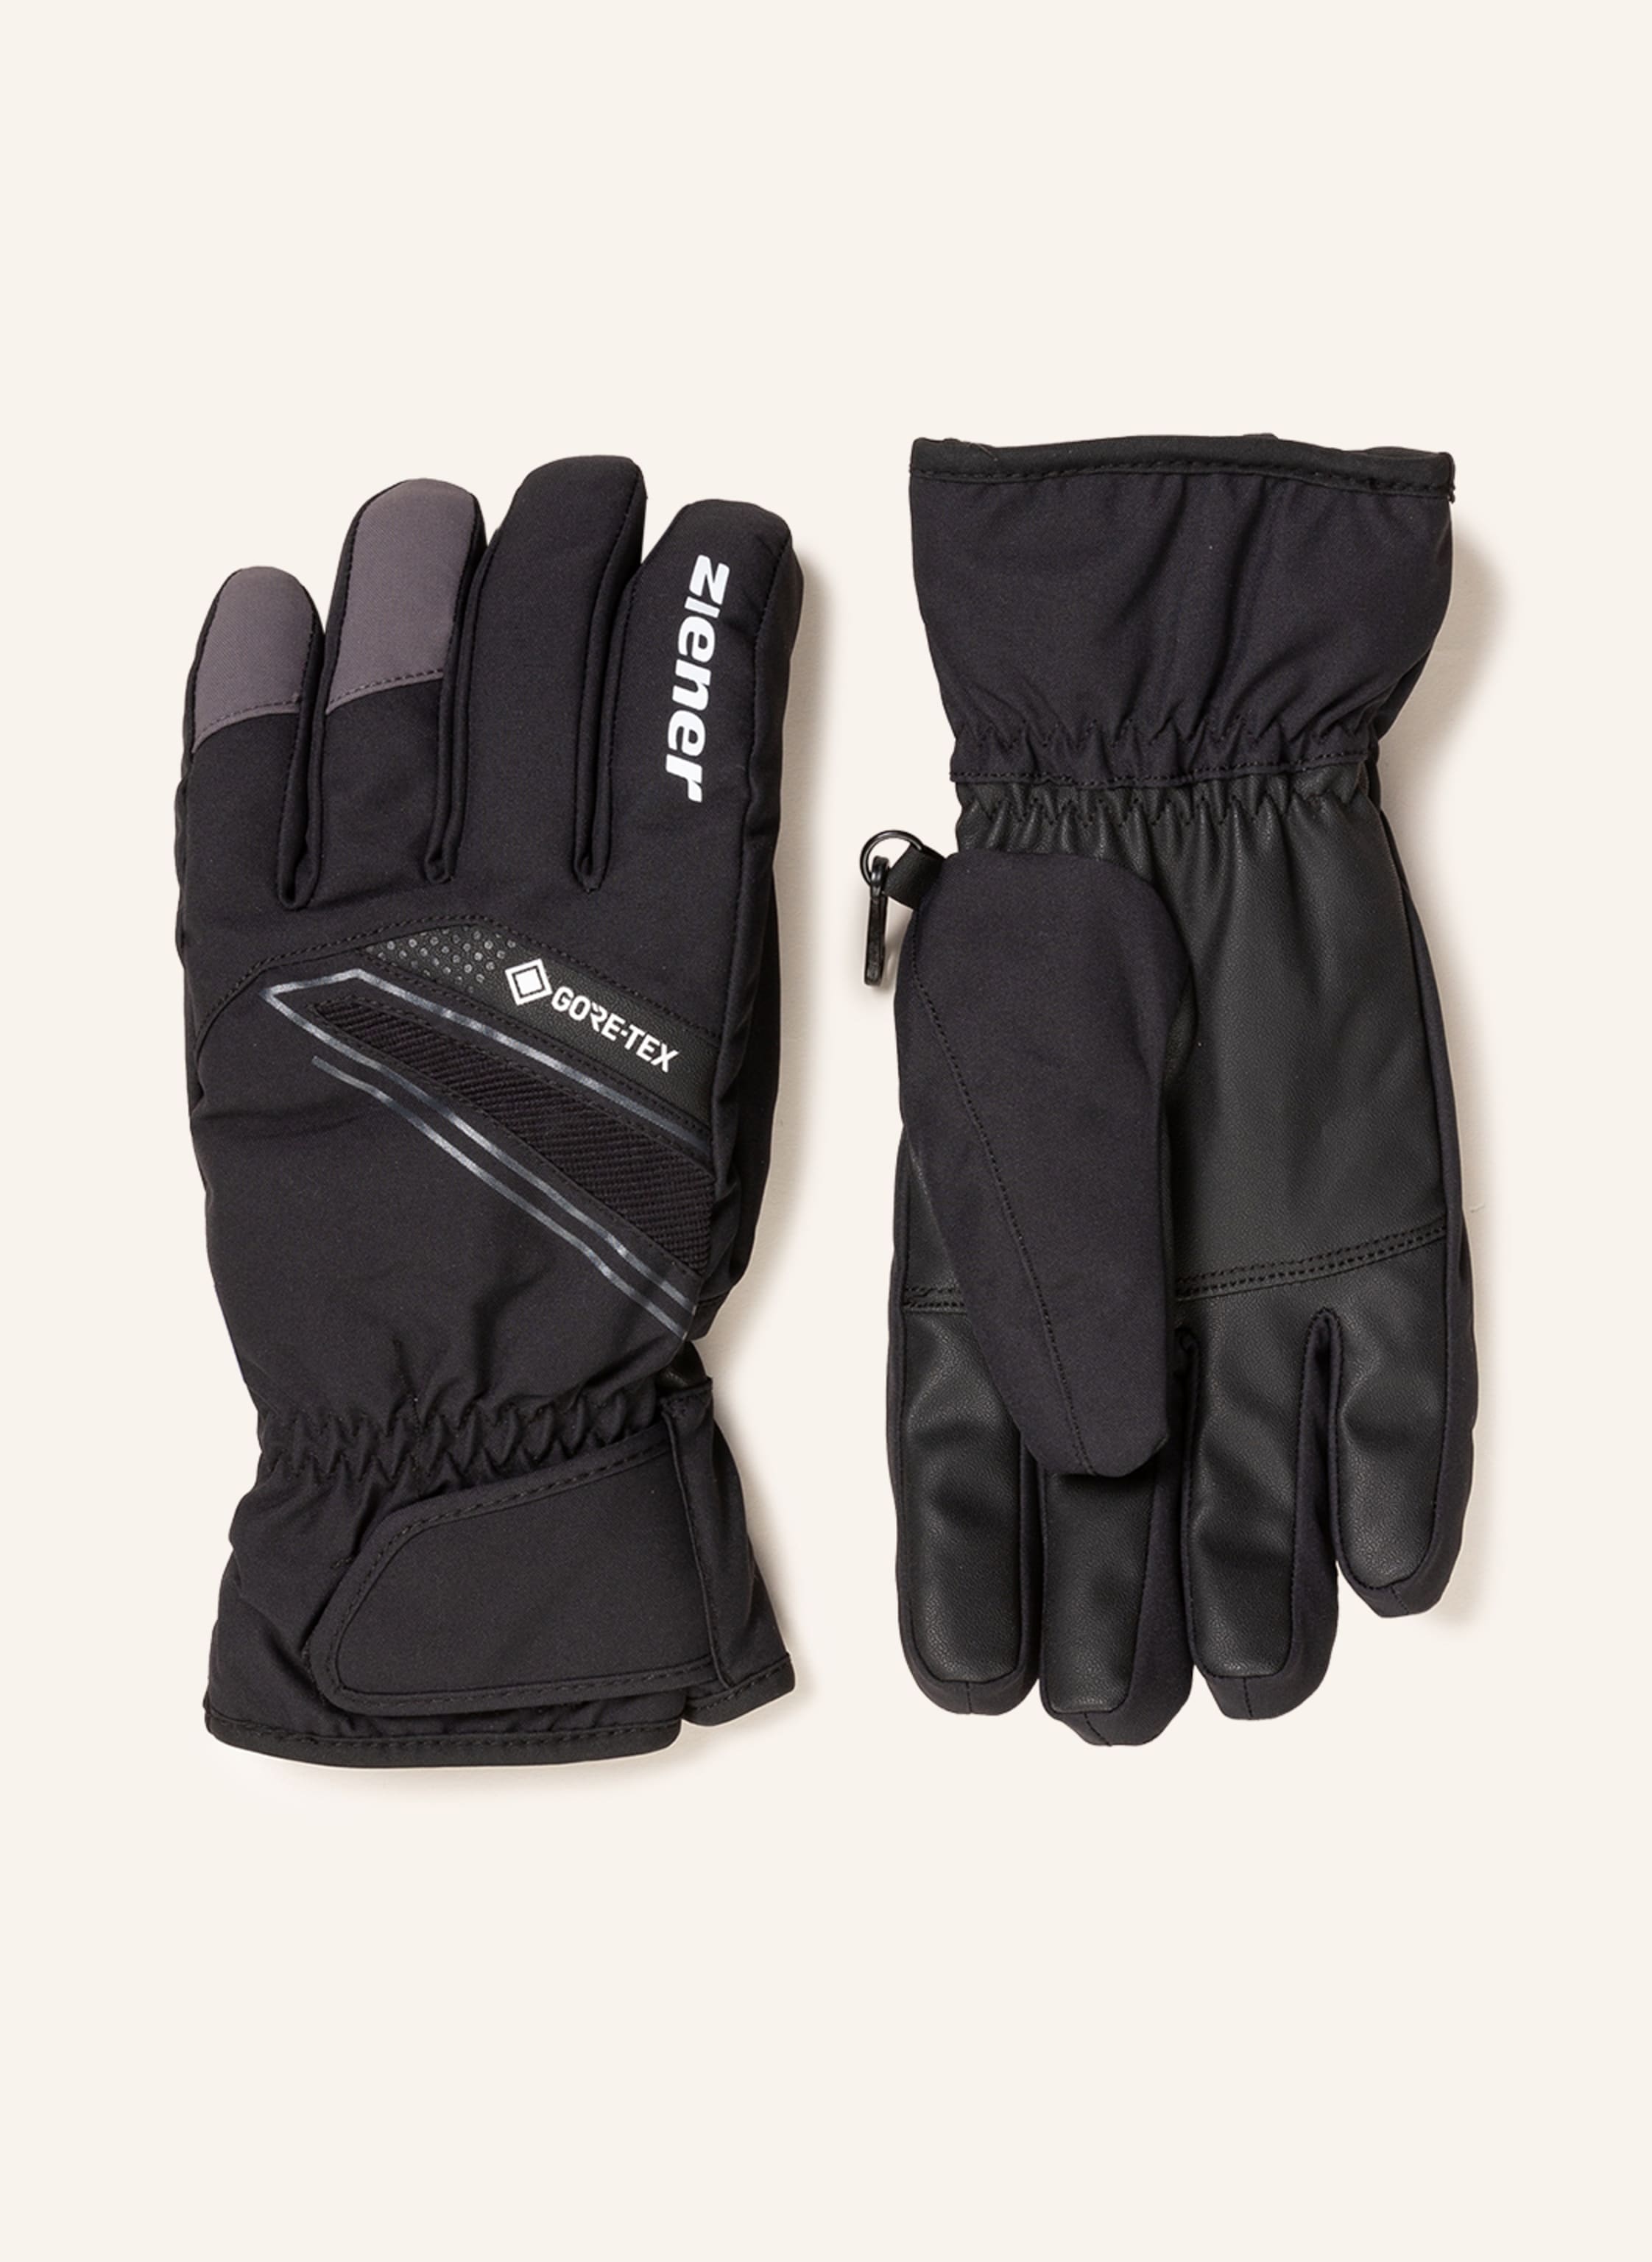 ziener Skiing gloves GUNAR GTX in black